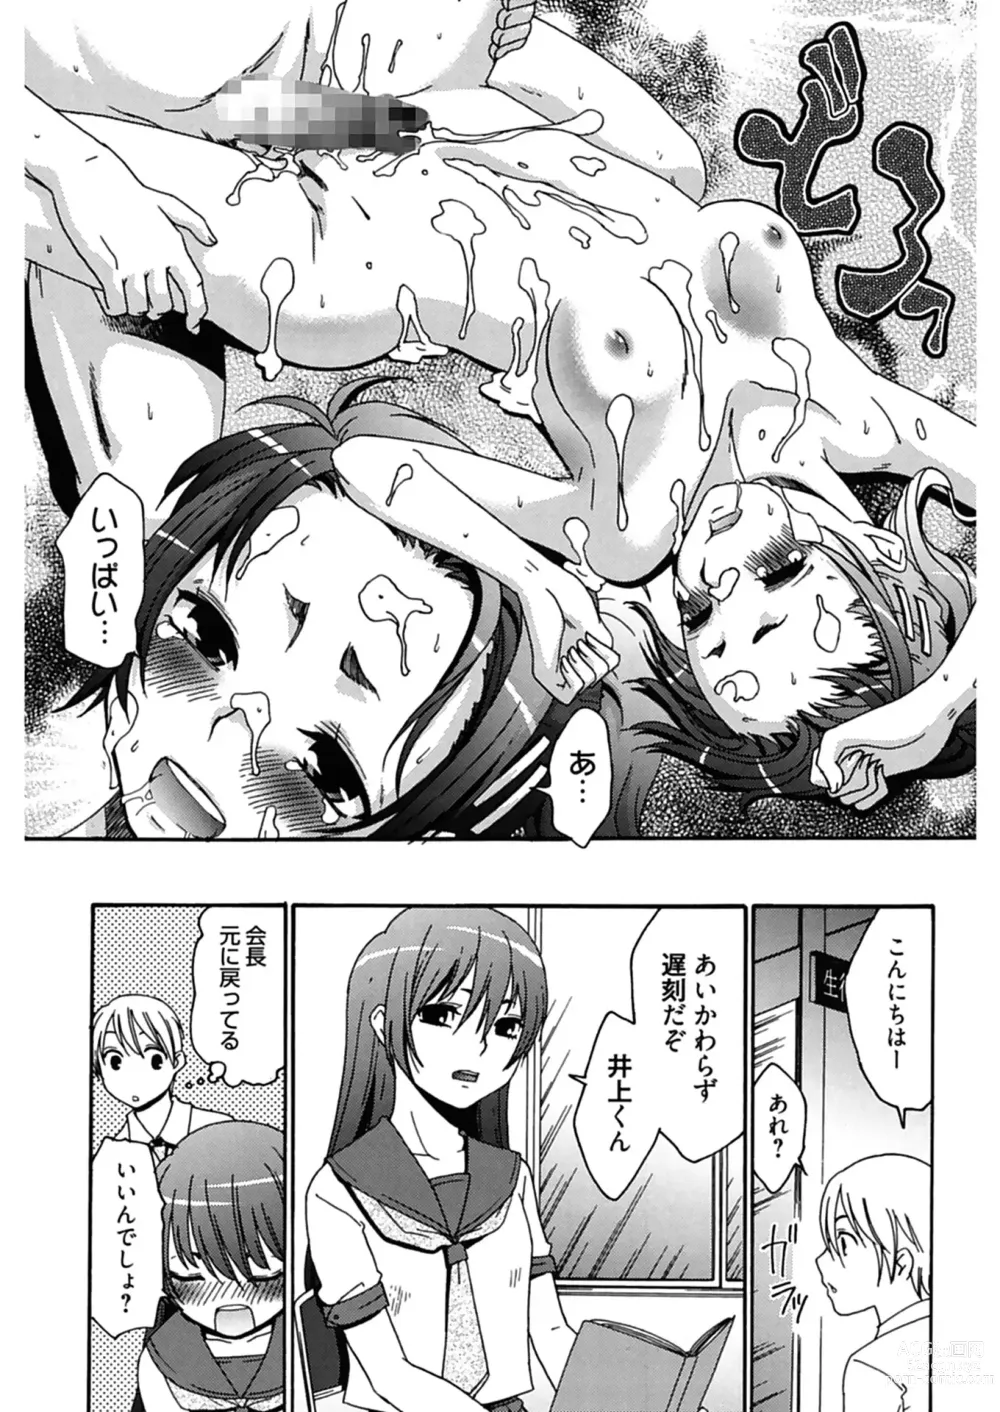 Page 189 of manga Hajimete no Renai Hajimete no Kanojo